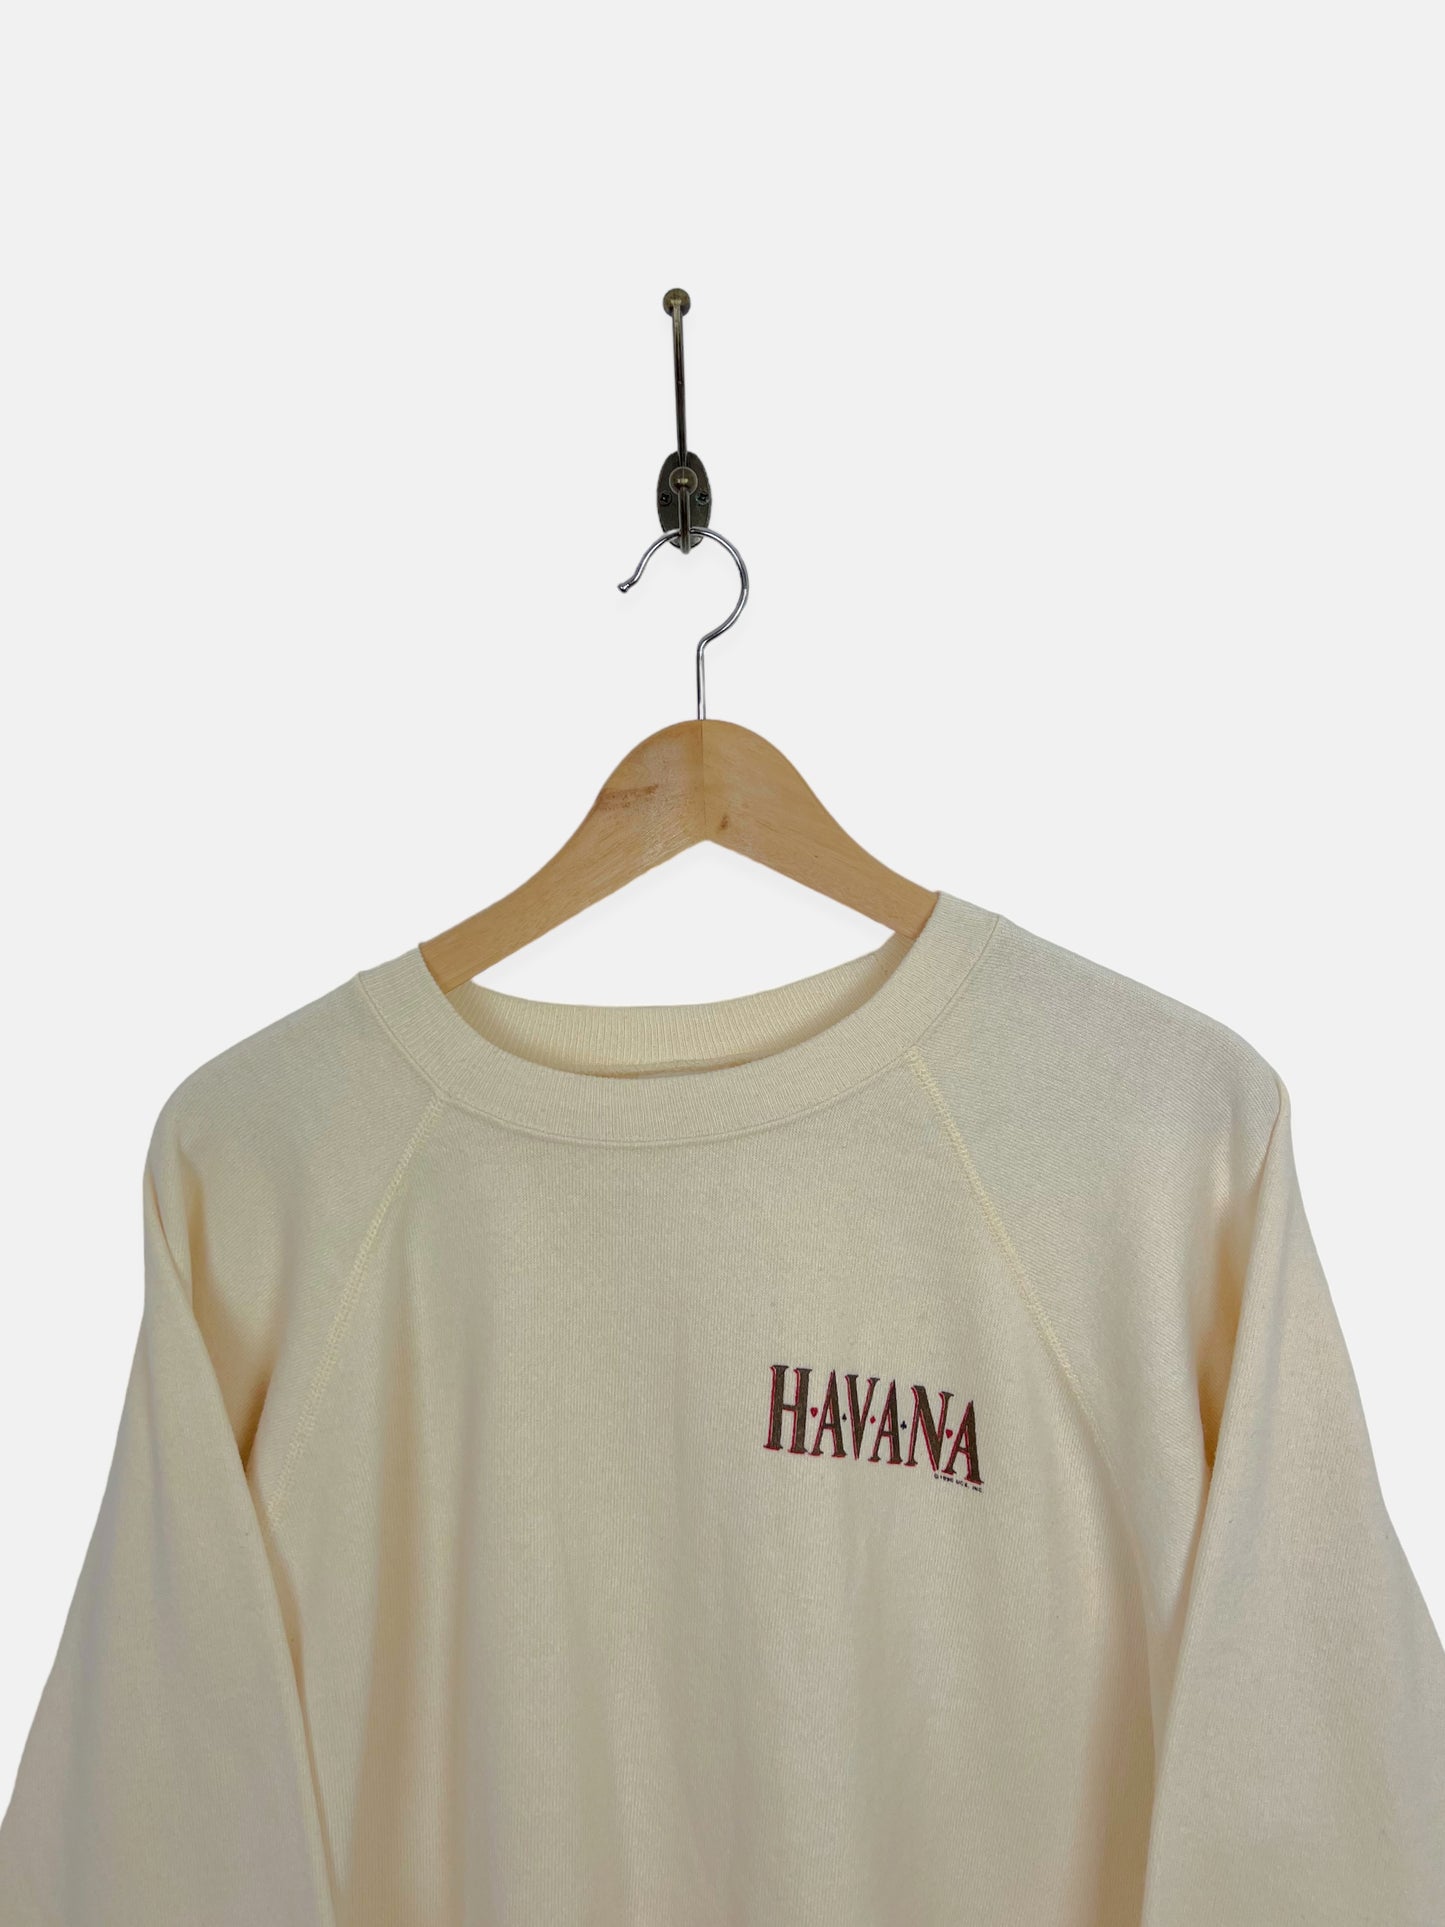 90's Havana USA Made Vintage Sweatshirt Size 12